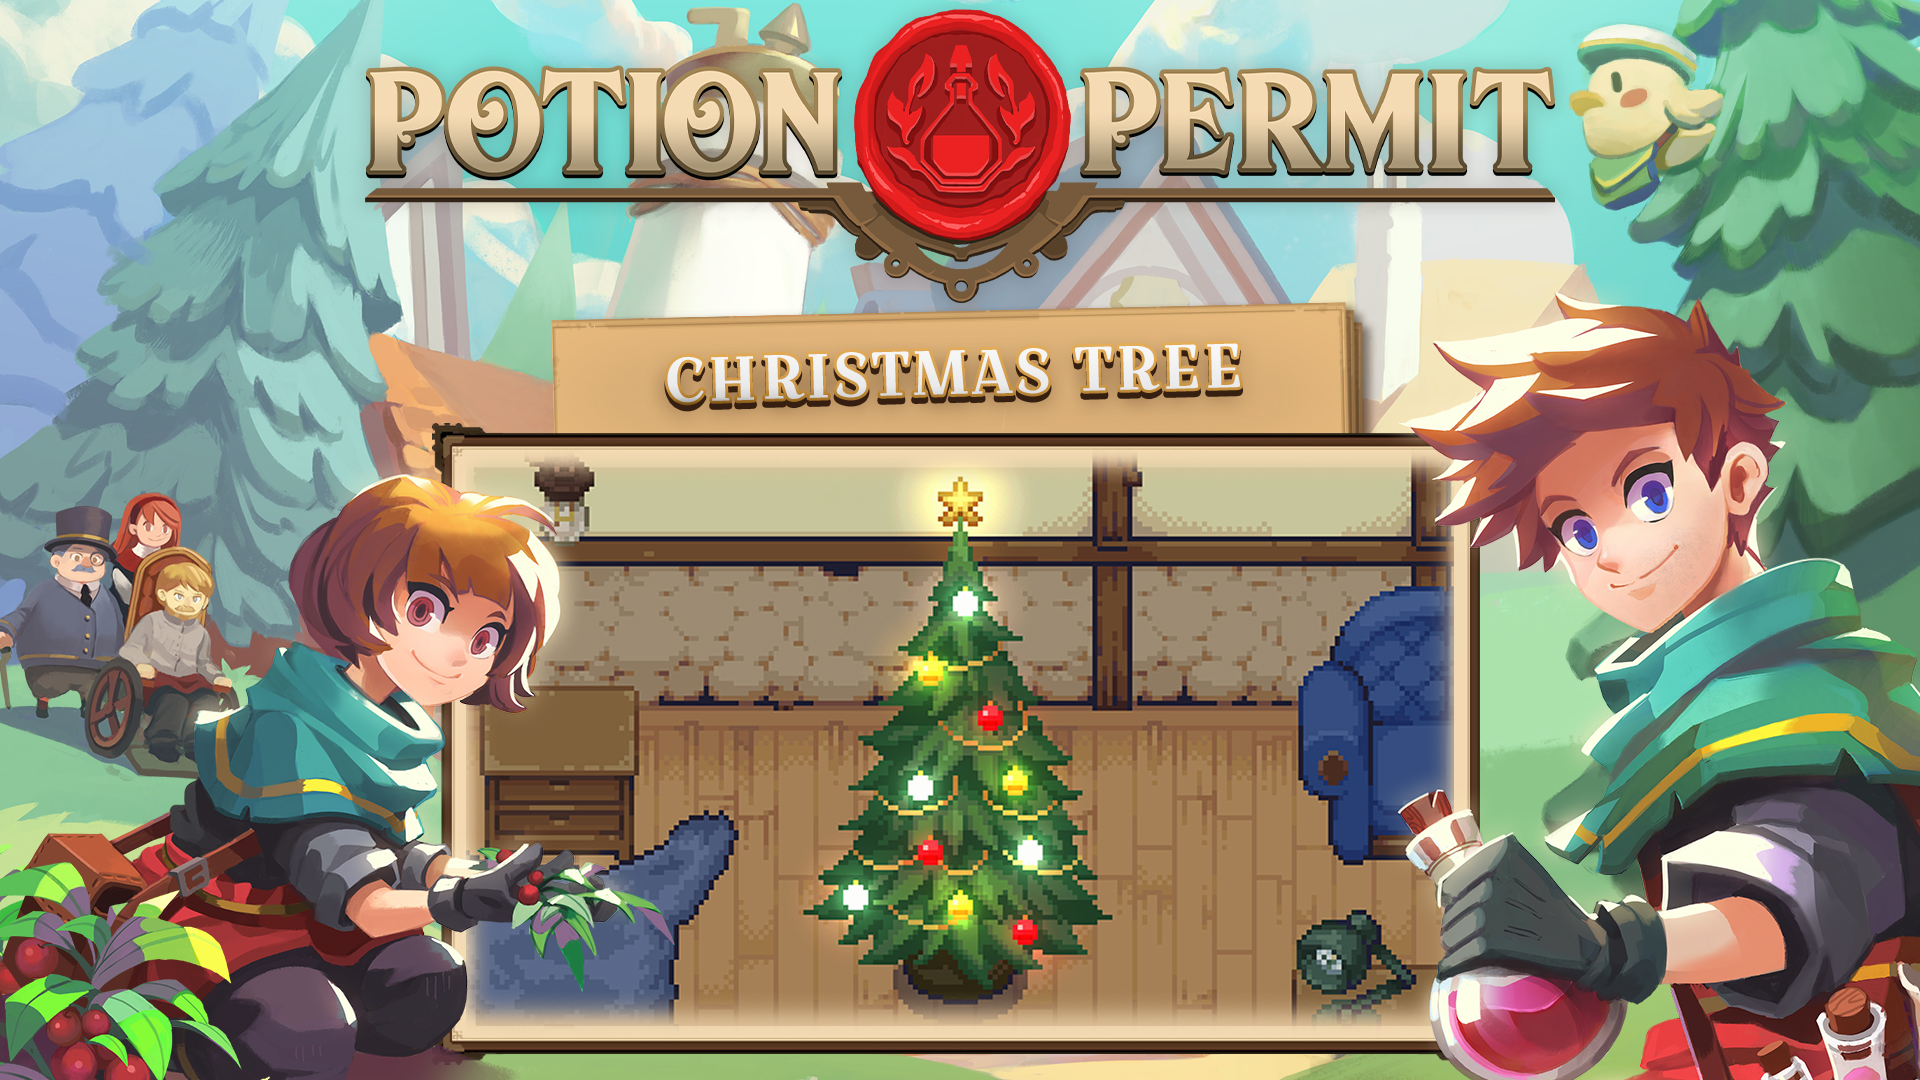 Potion Permit - Christmas Tree